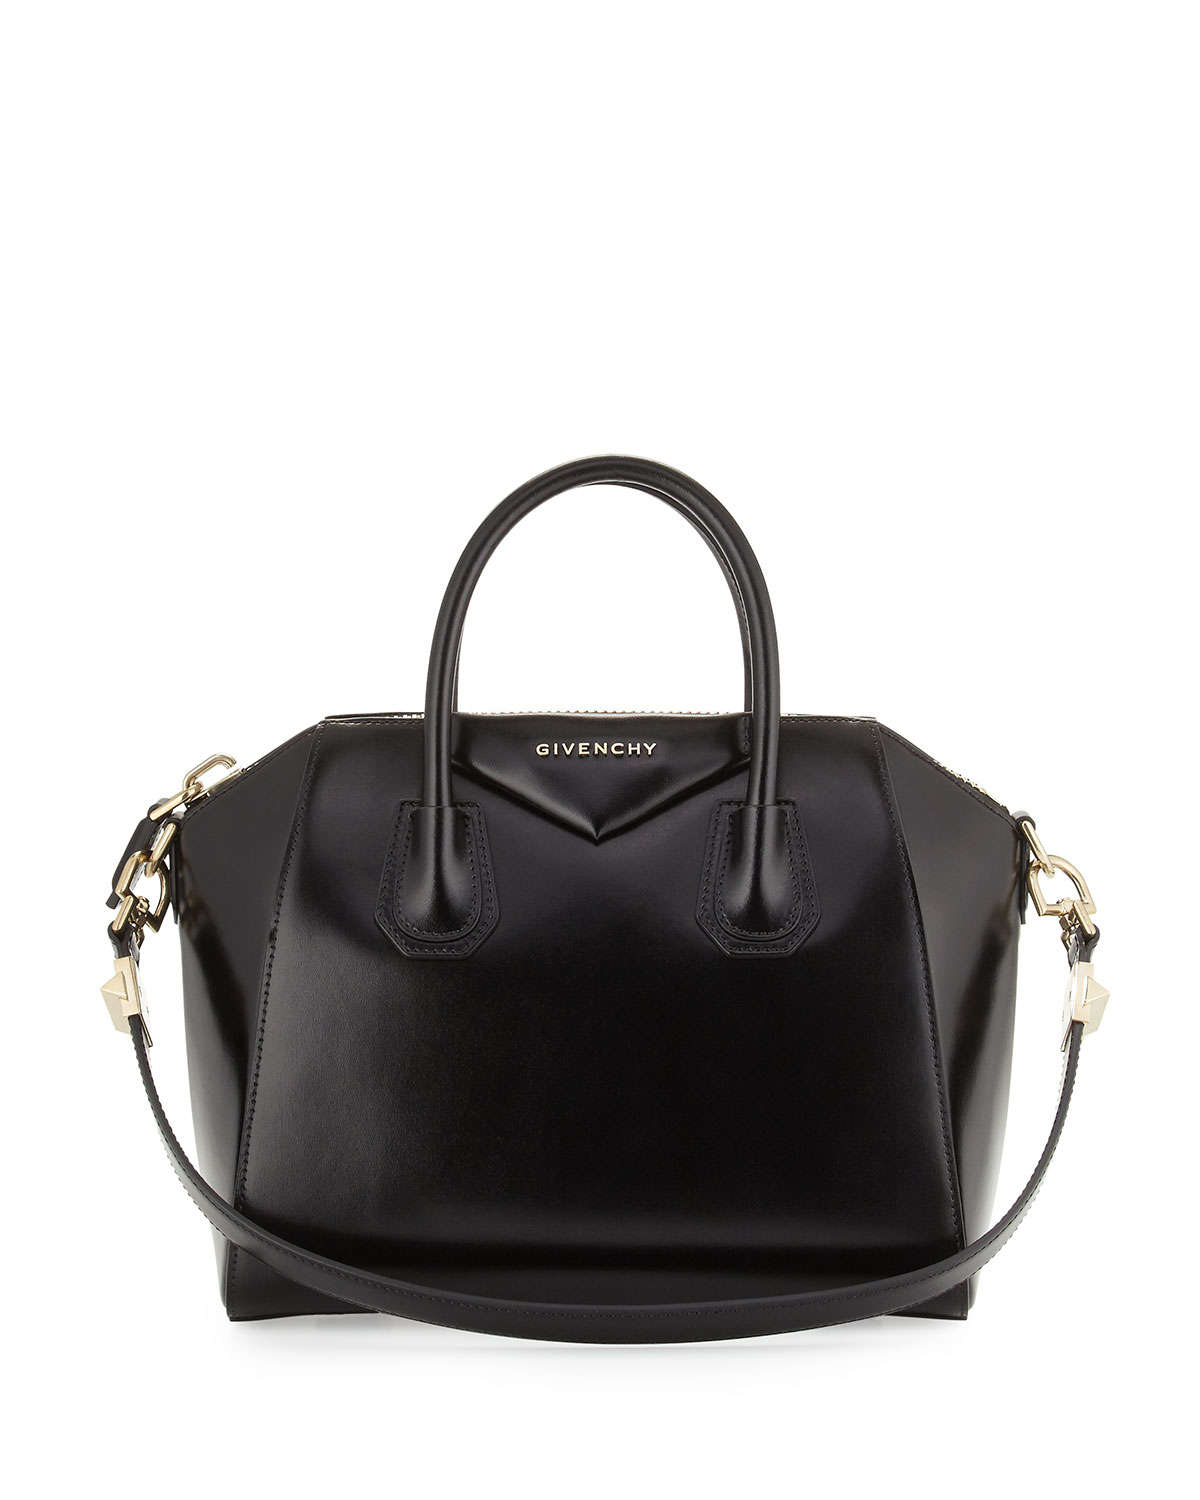 Lyst - Givenchy Antigona Small Leather Satchel Bag in Black